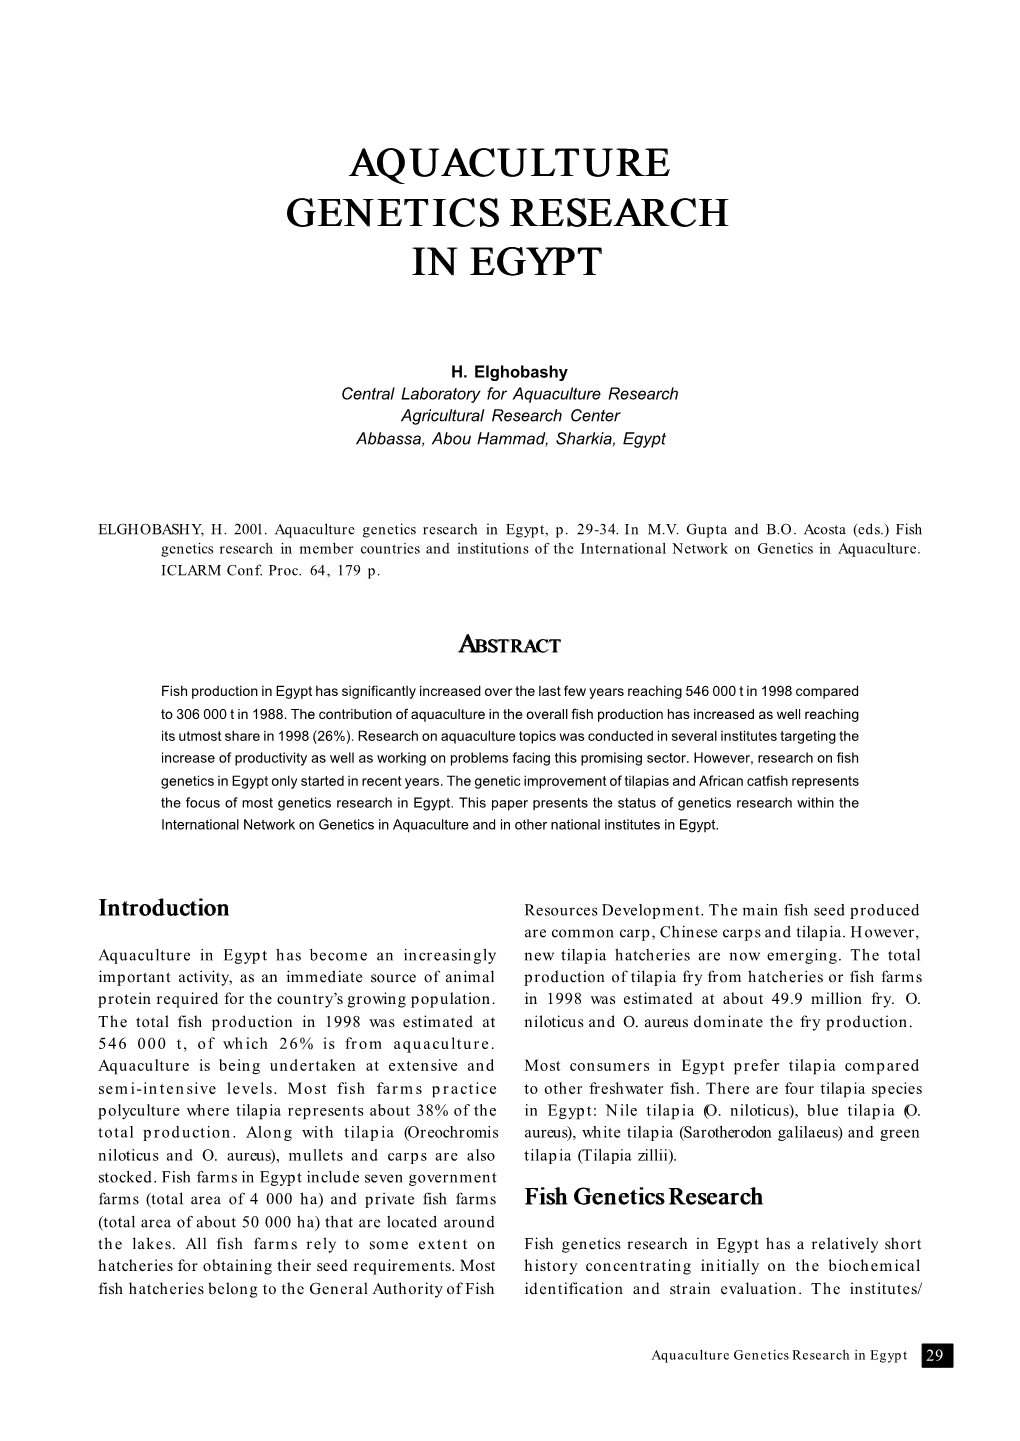 Aquaculture Genetics Research in Egypt